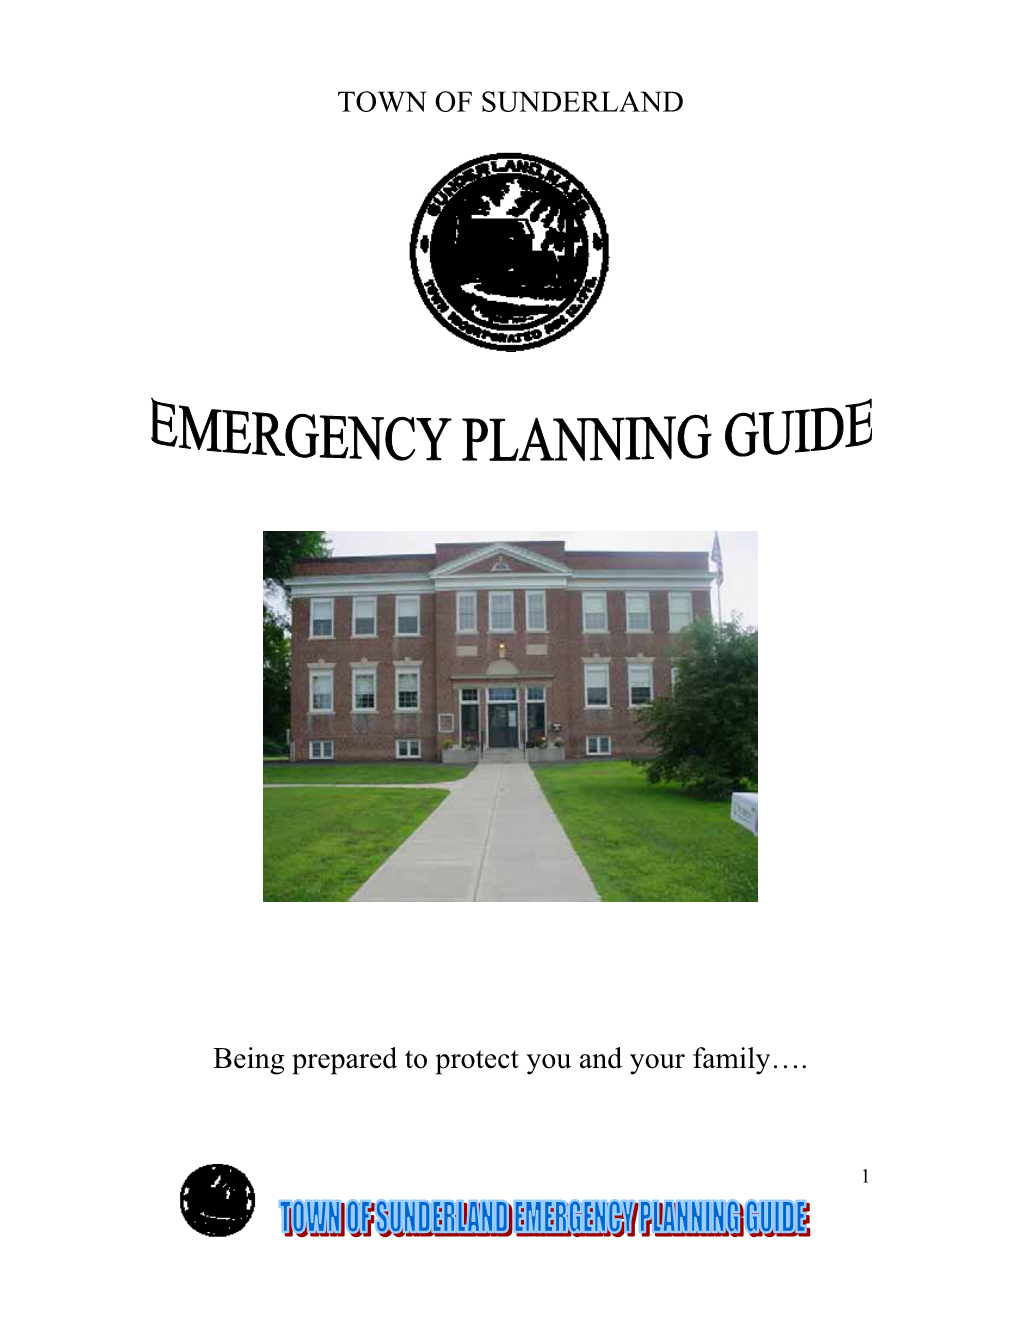 Emergency Preparedness Guide” Do?